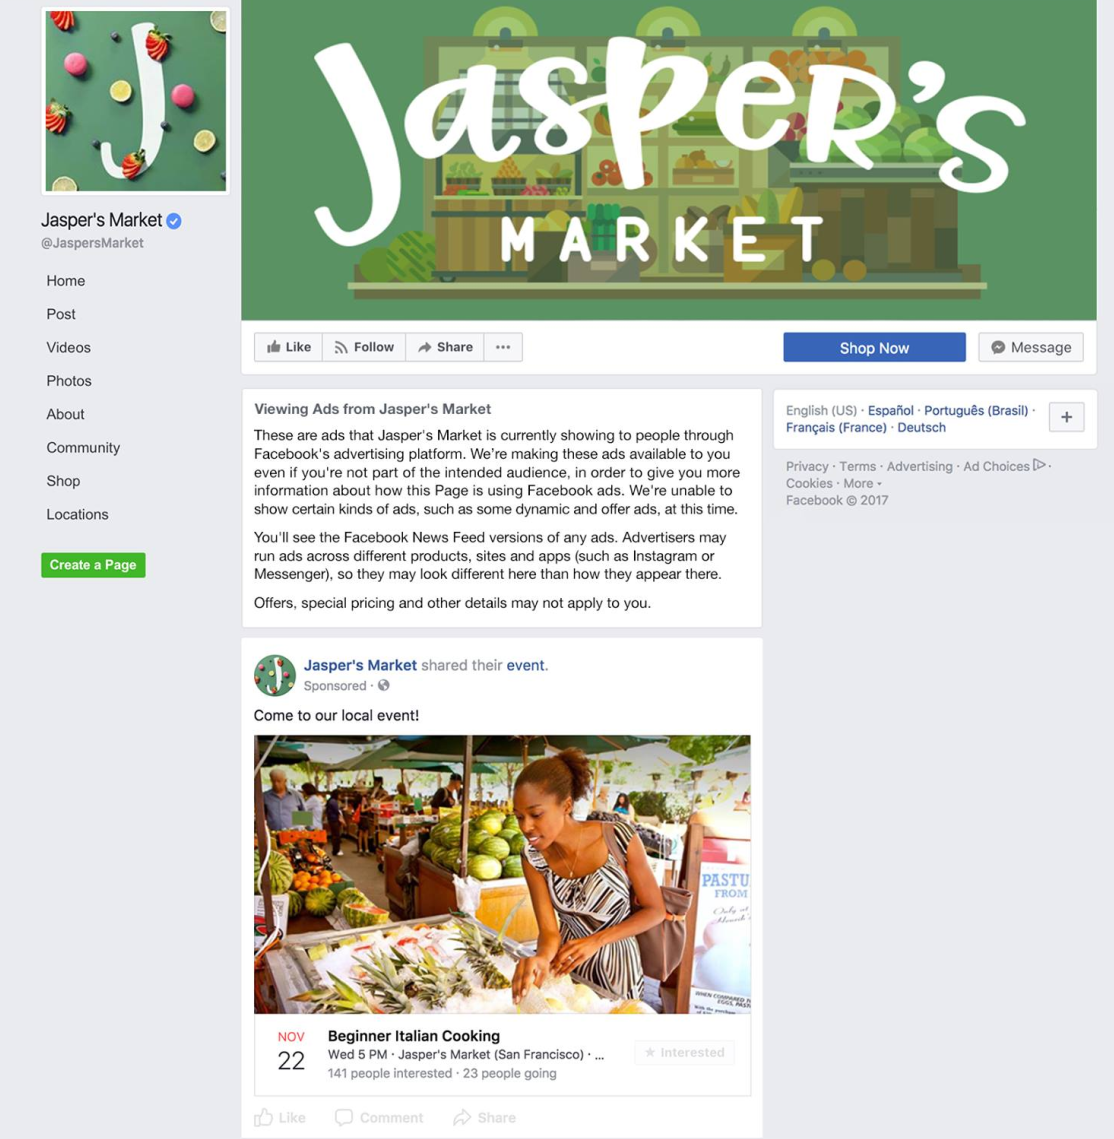 Jasper's Market Facebook page